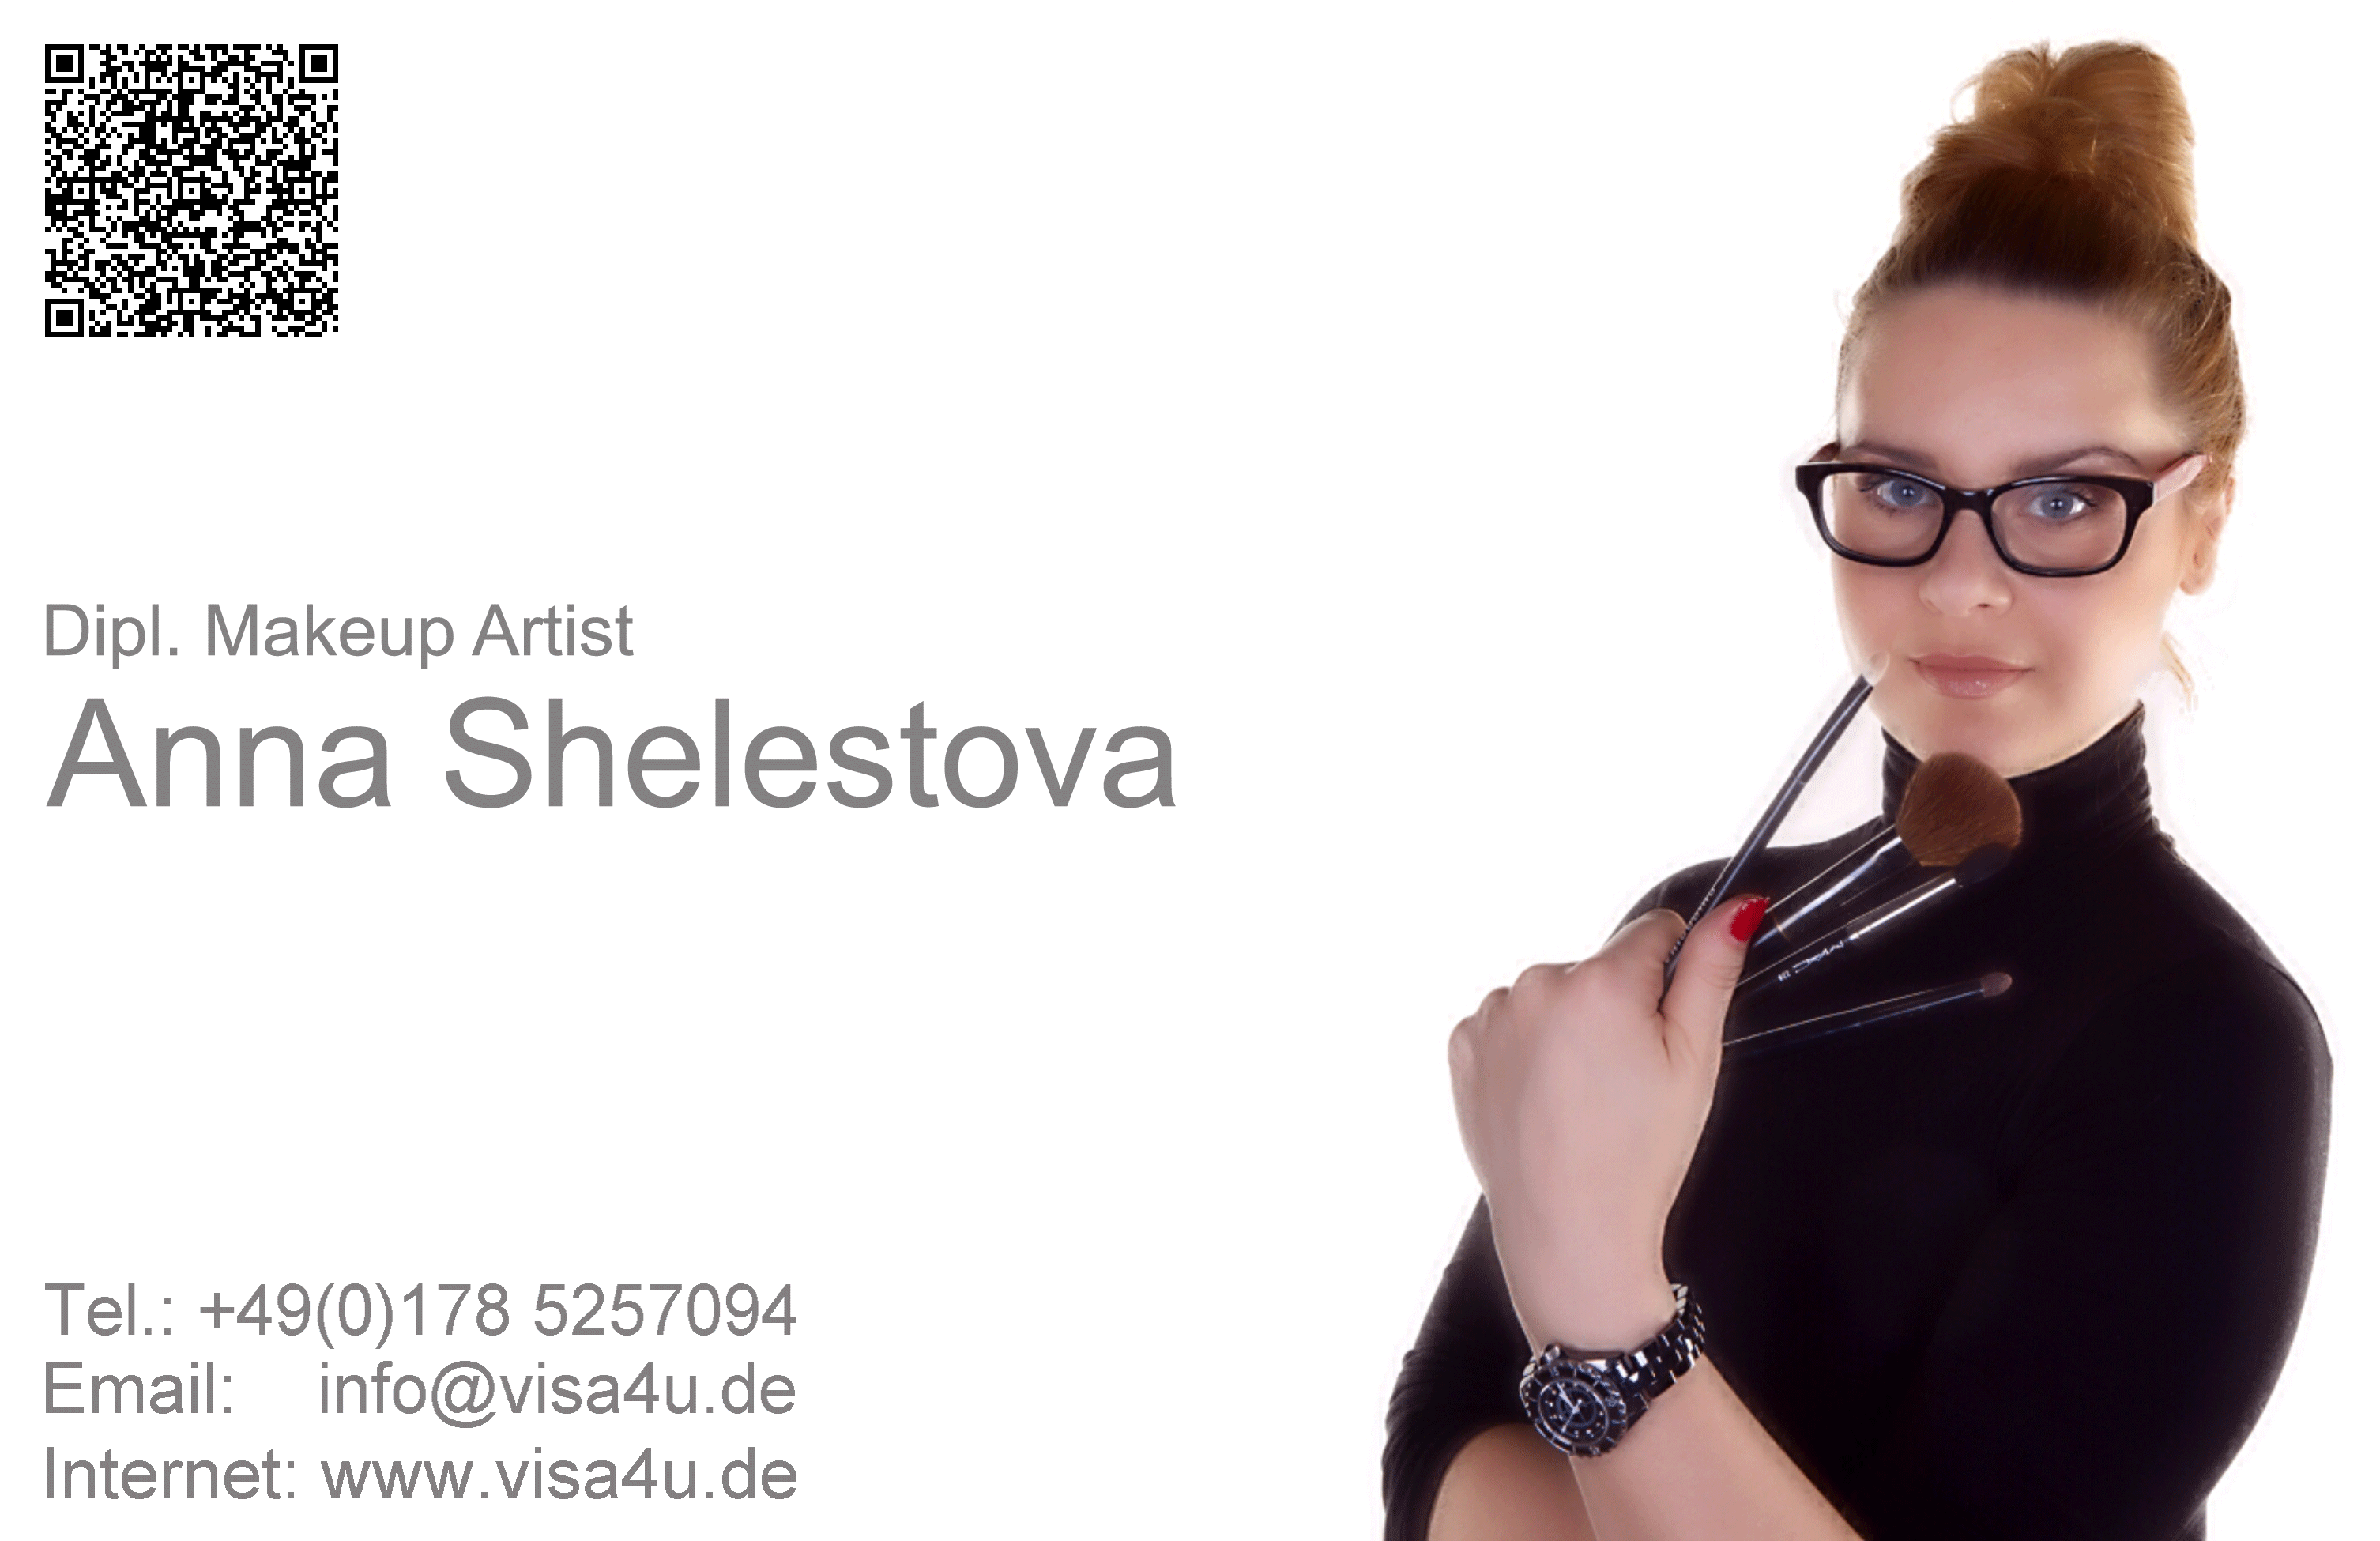 visa4u.de - Anna Shelestova - Perfect Makeup